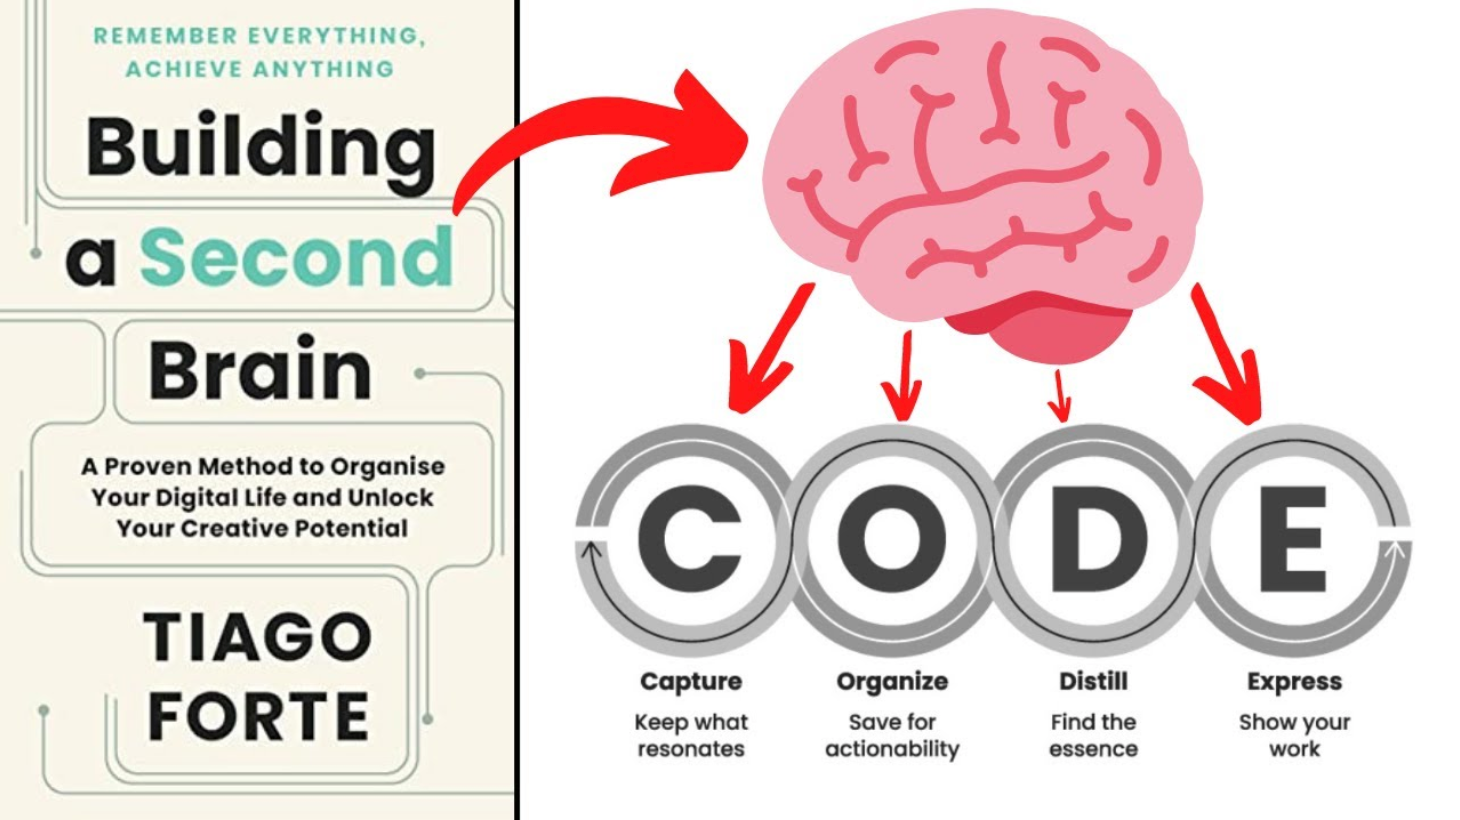 Code brains. Second Brain. Build a second Brain. Second Brain концепция. Тиаго форте second Brain.